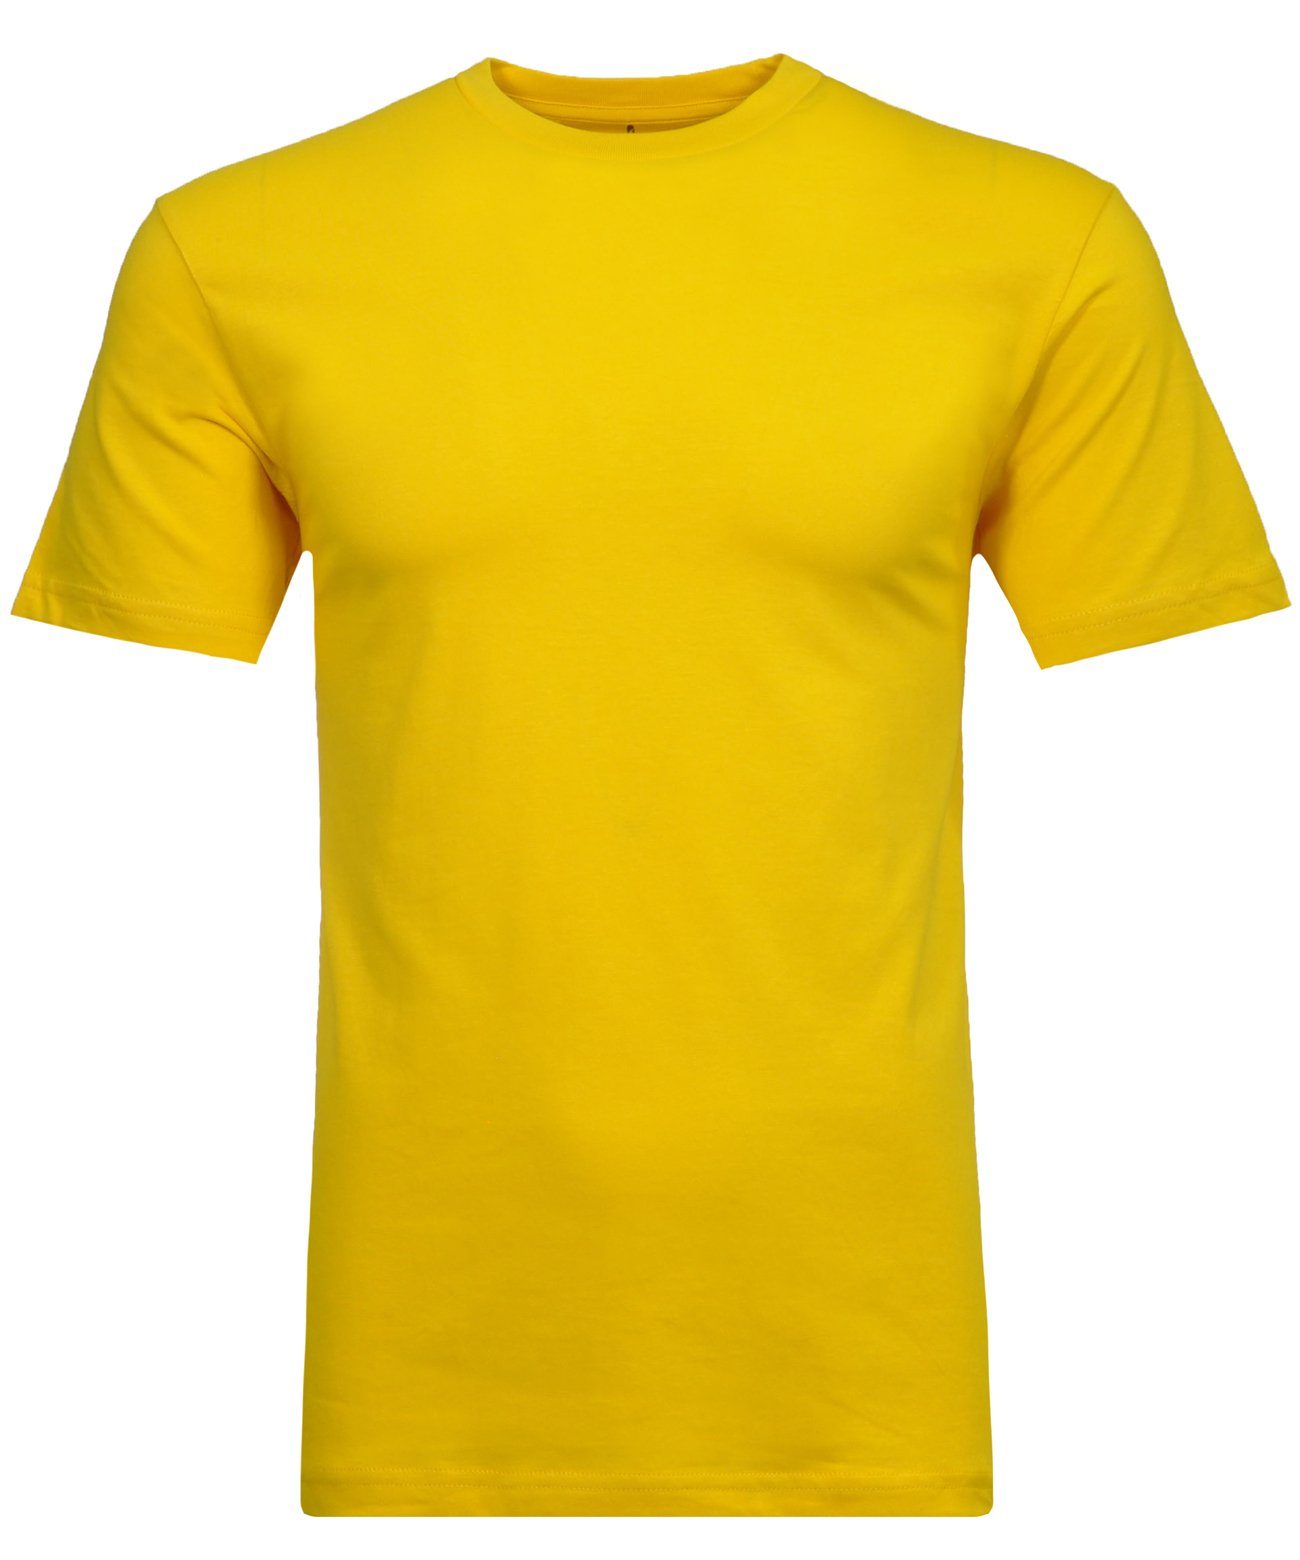 RAGMAN Longshirt Gelb